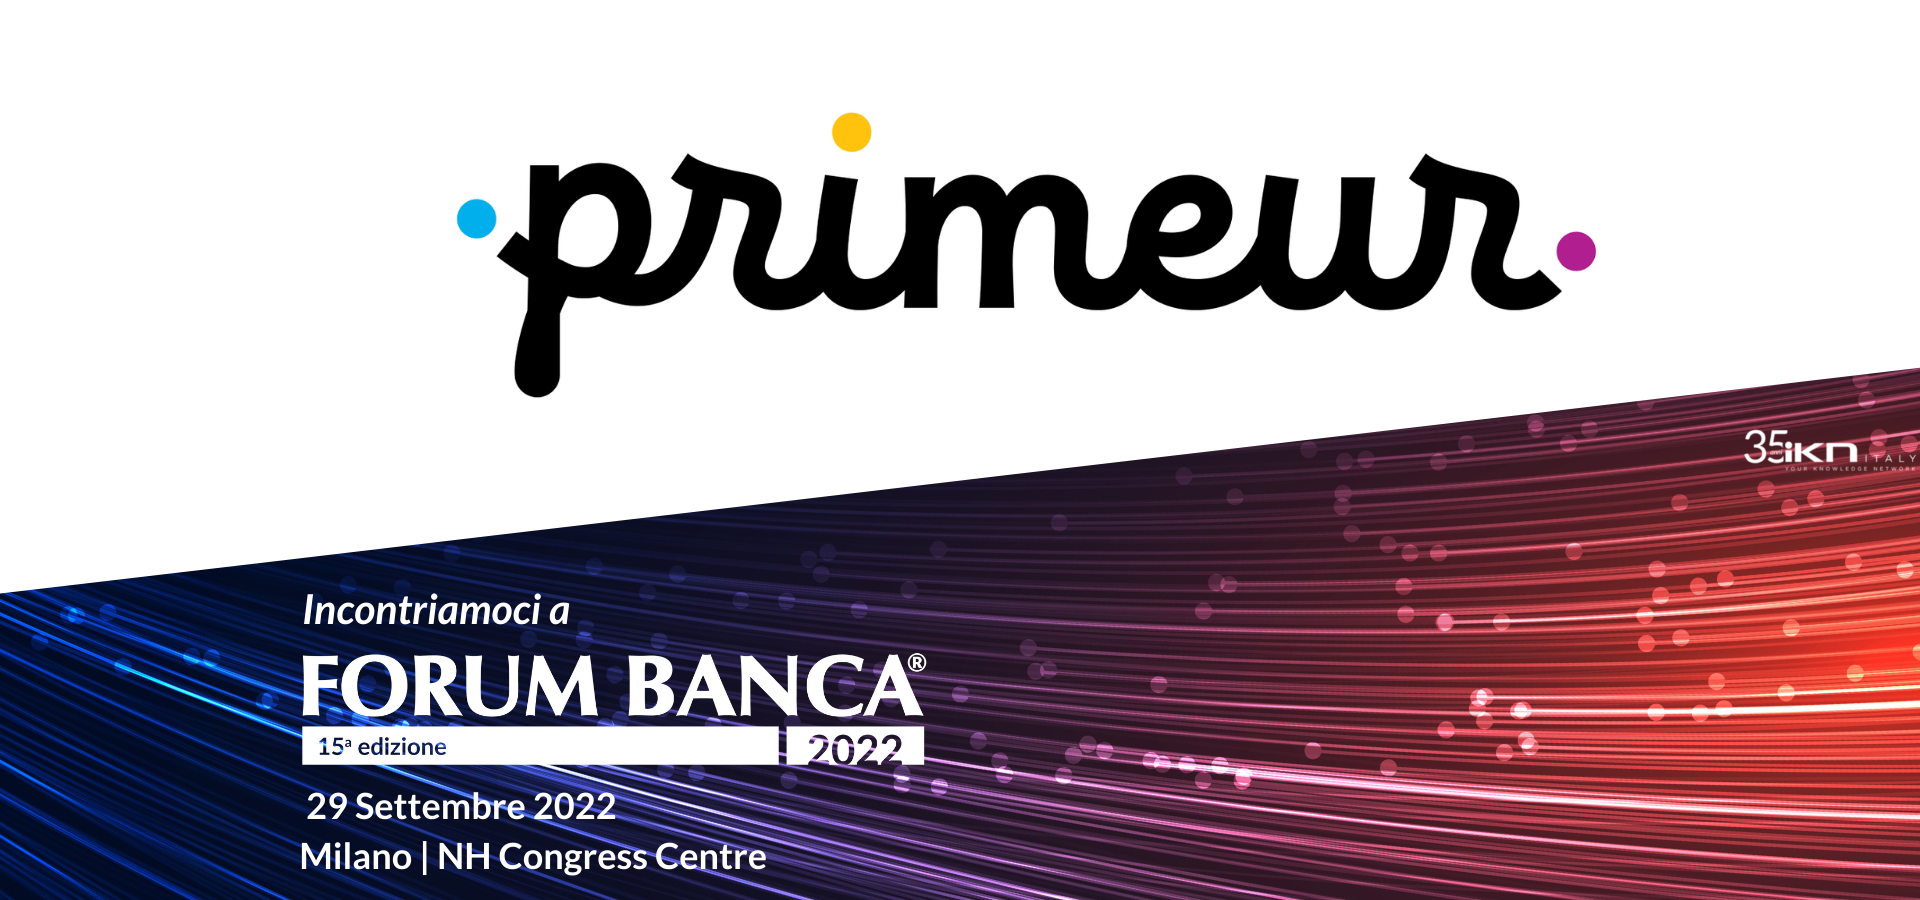 Primeur Gold Sponsor al Forum Banca 2022